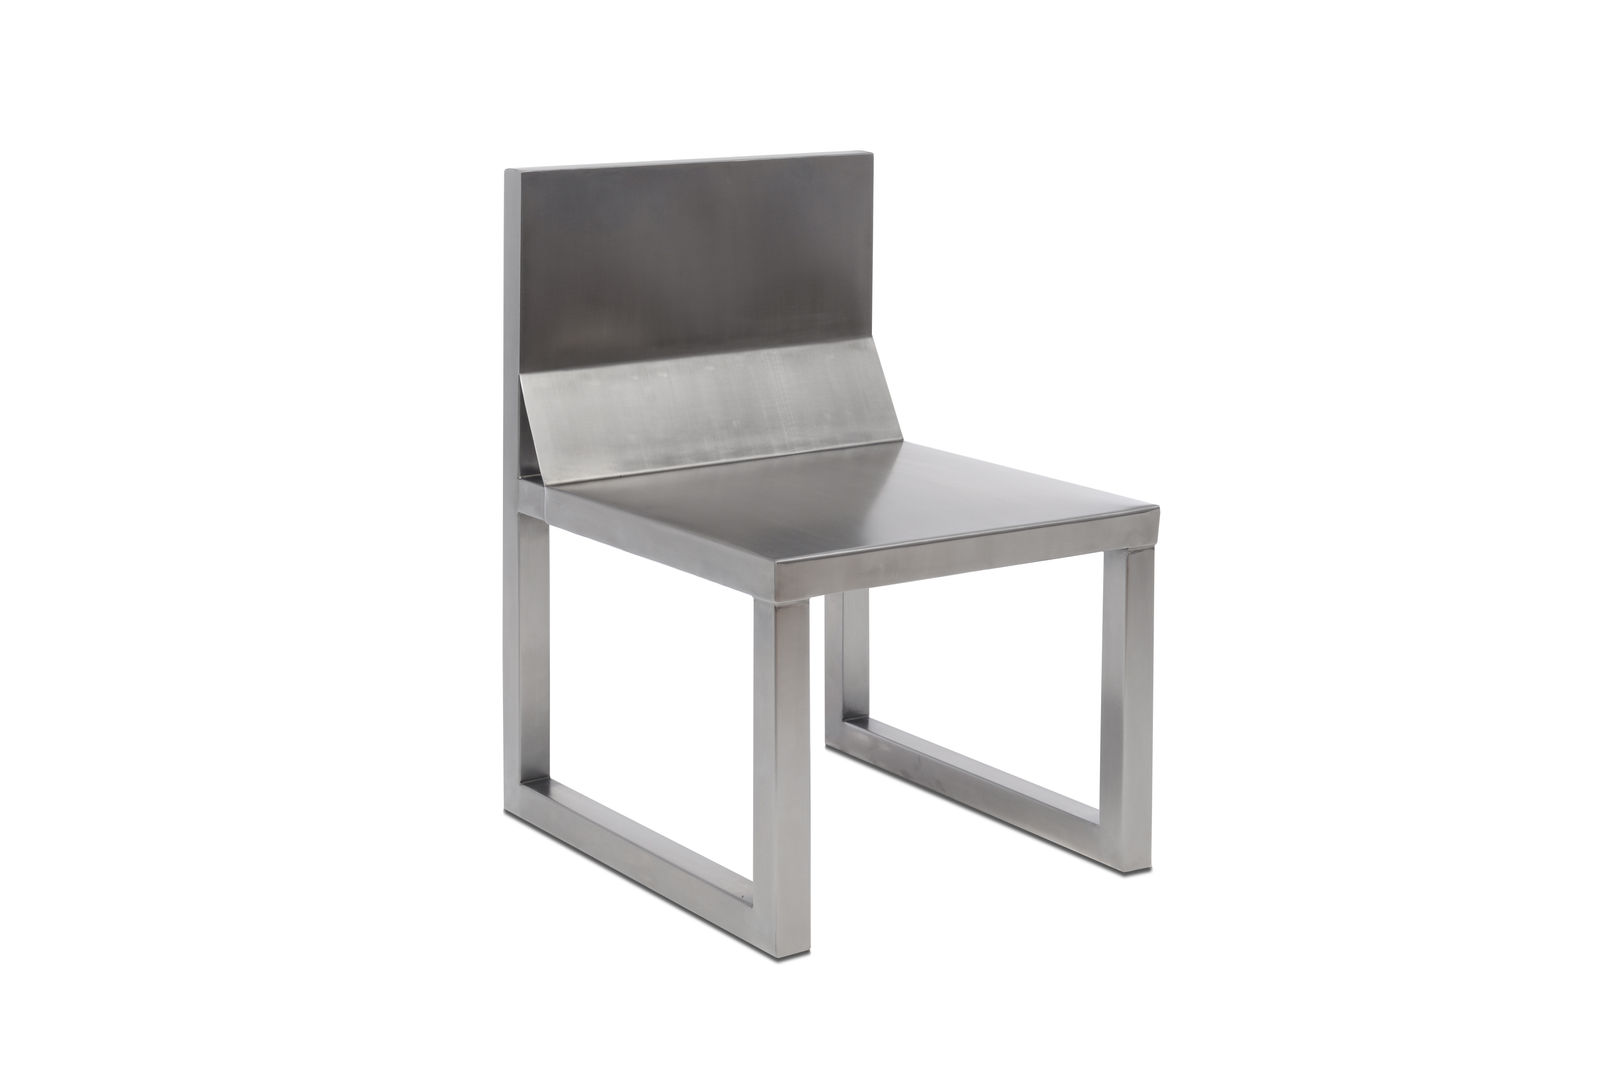 Silla Lyon, Etienne Design Etienne Design Taman Minimalis Metal Furniture